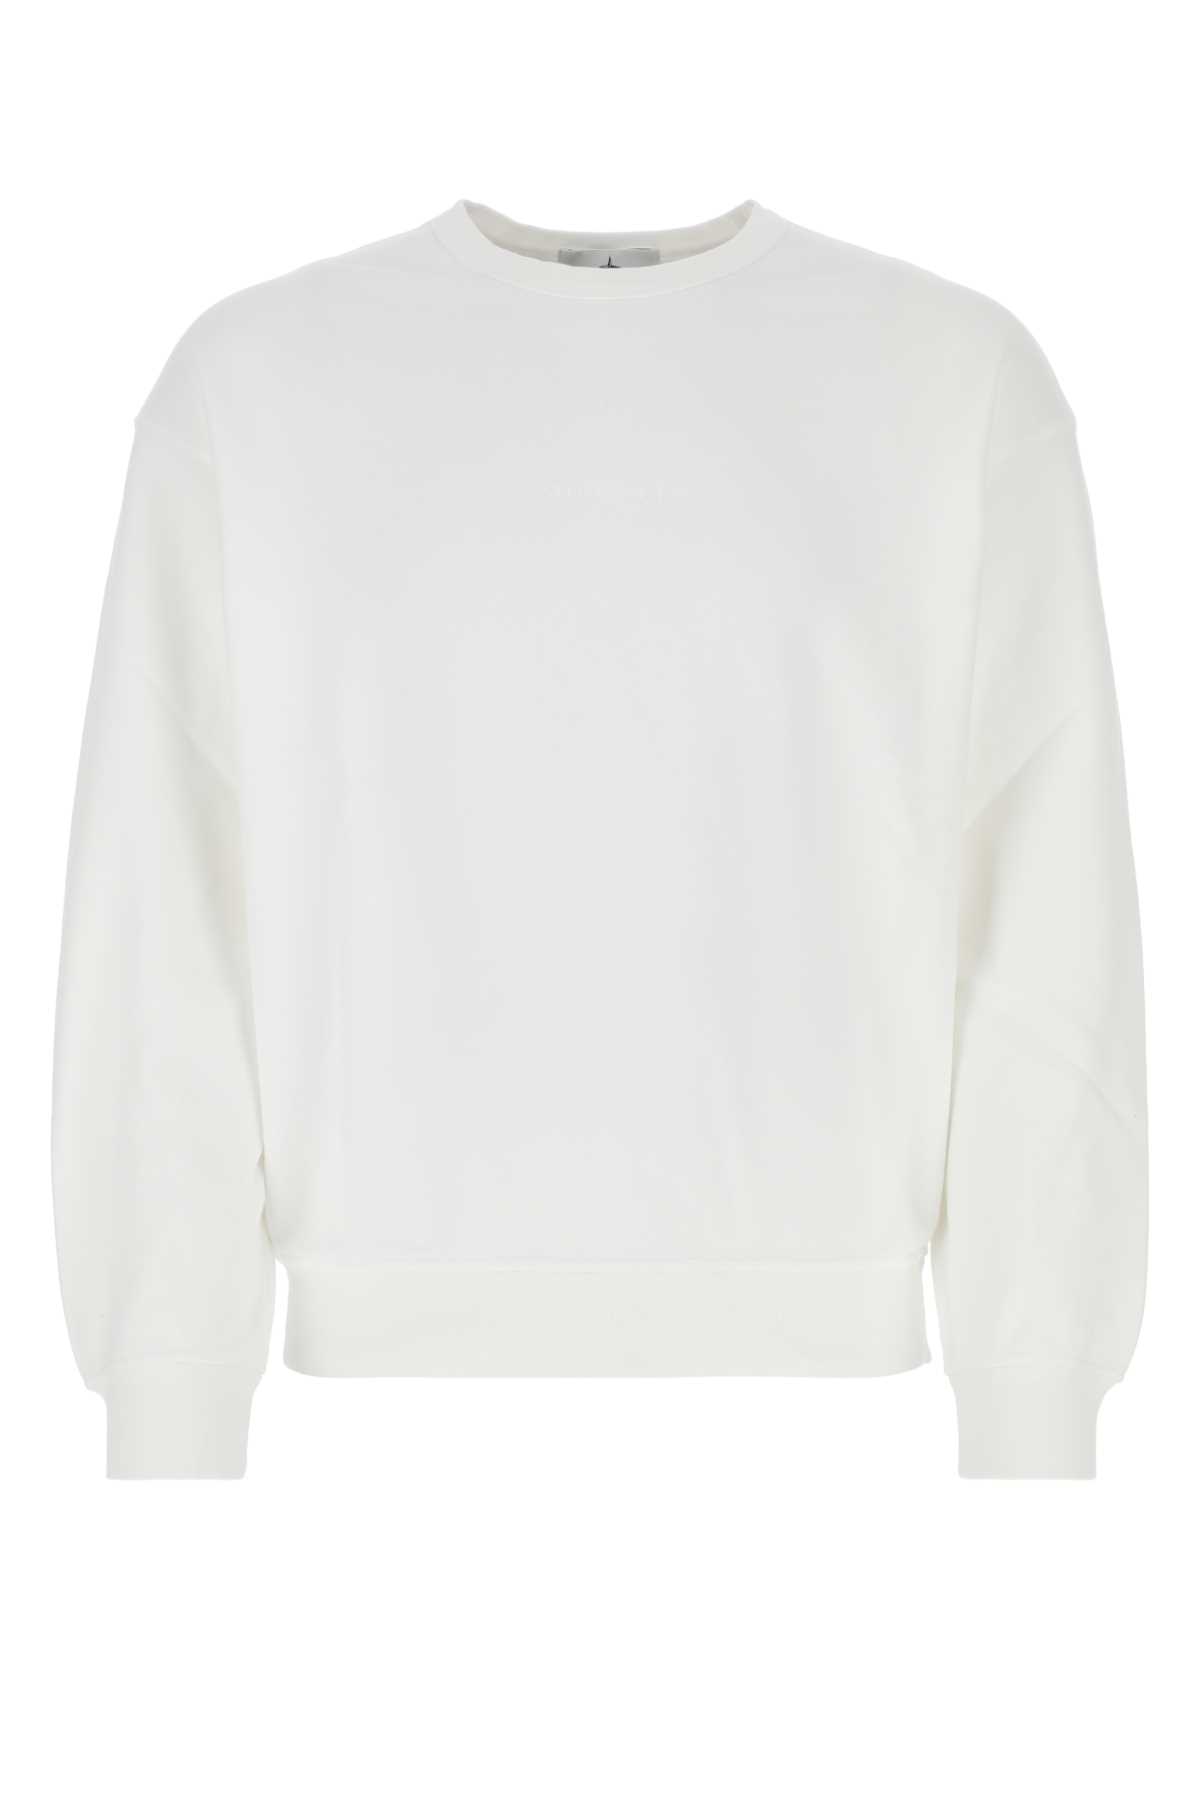 Stone Island Cotton Sweatshirt